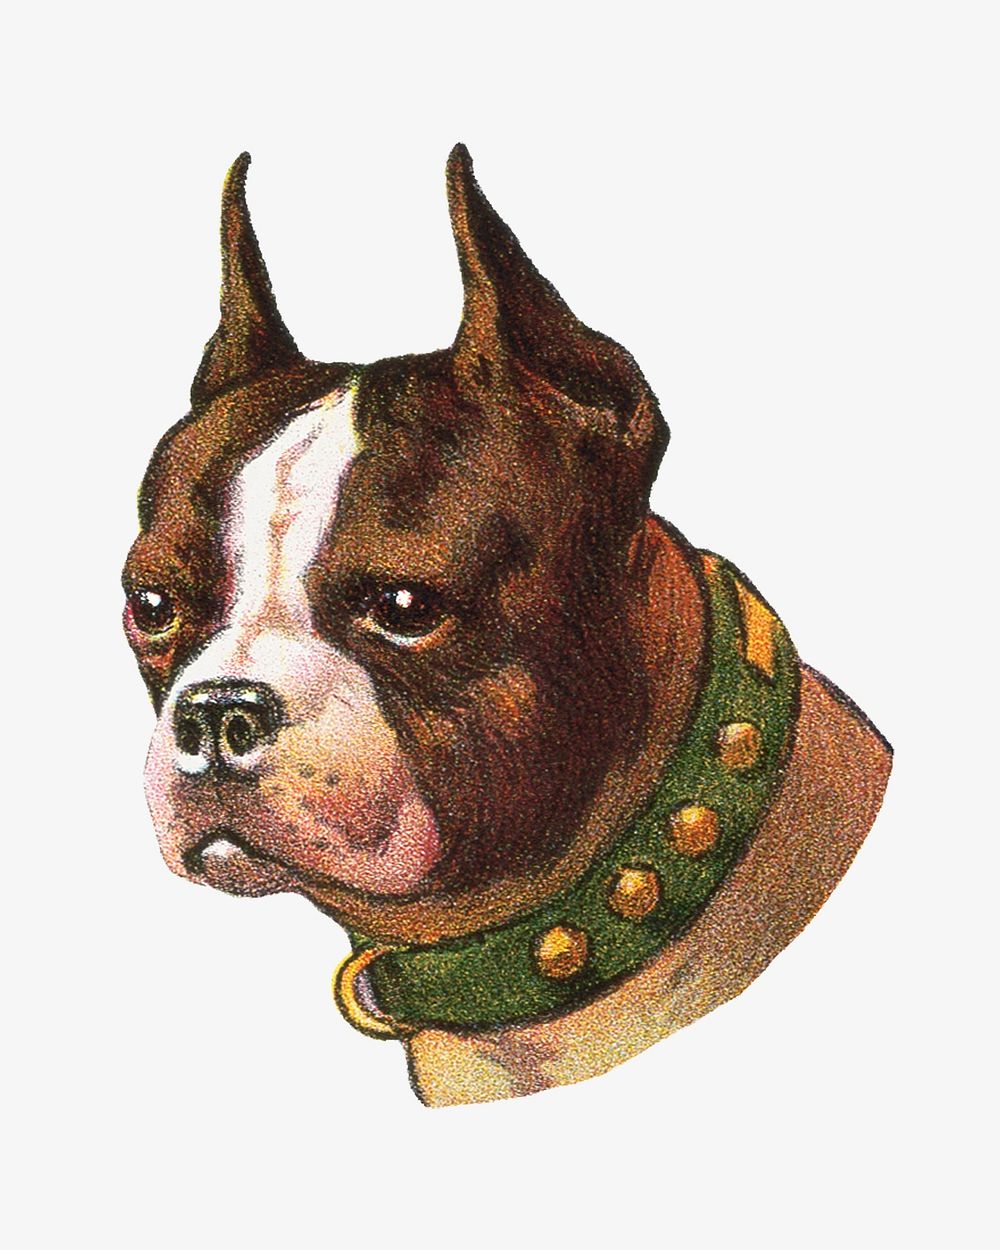 Boston Terrier dog, vintage animal illustration.    Remixed by rawpixel.